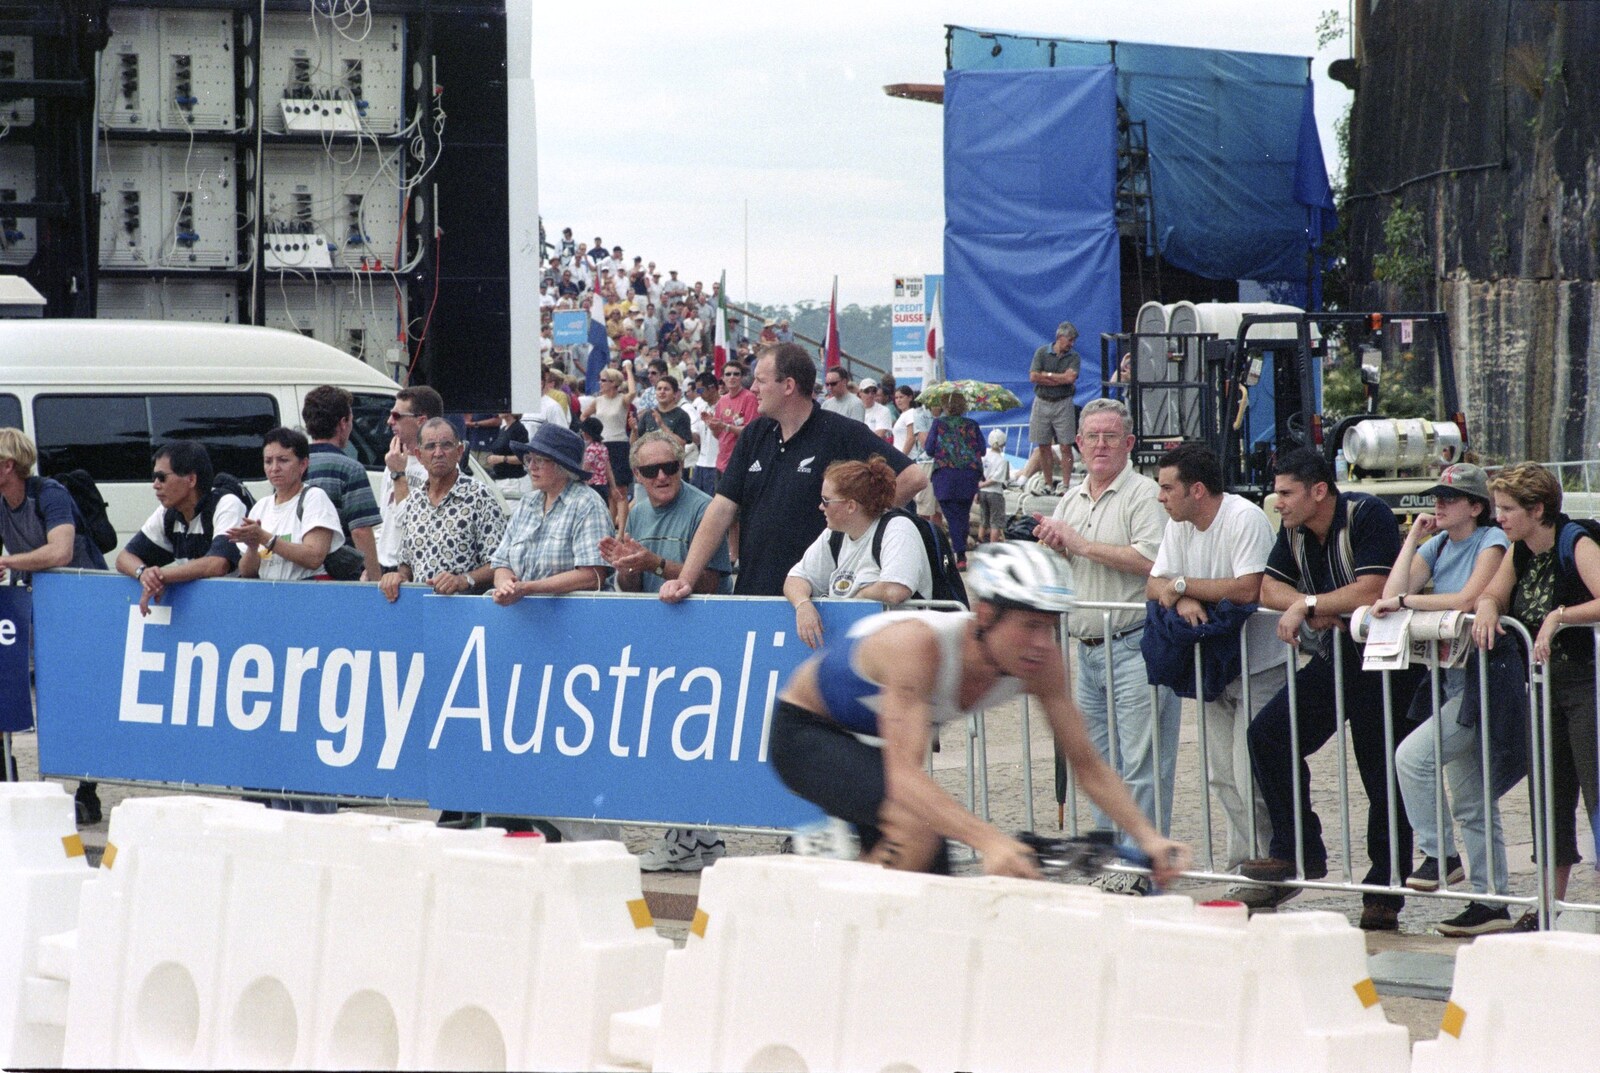 Crowd scenes at the Sydney Triathalon from Sydney Triathlon, Sydney, Australia - 16th April 2000